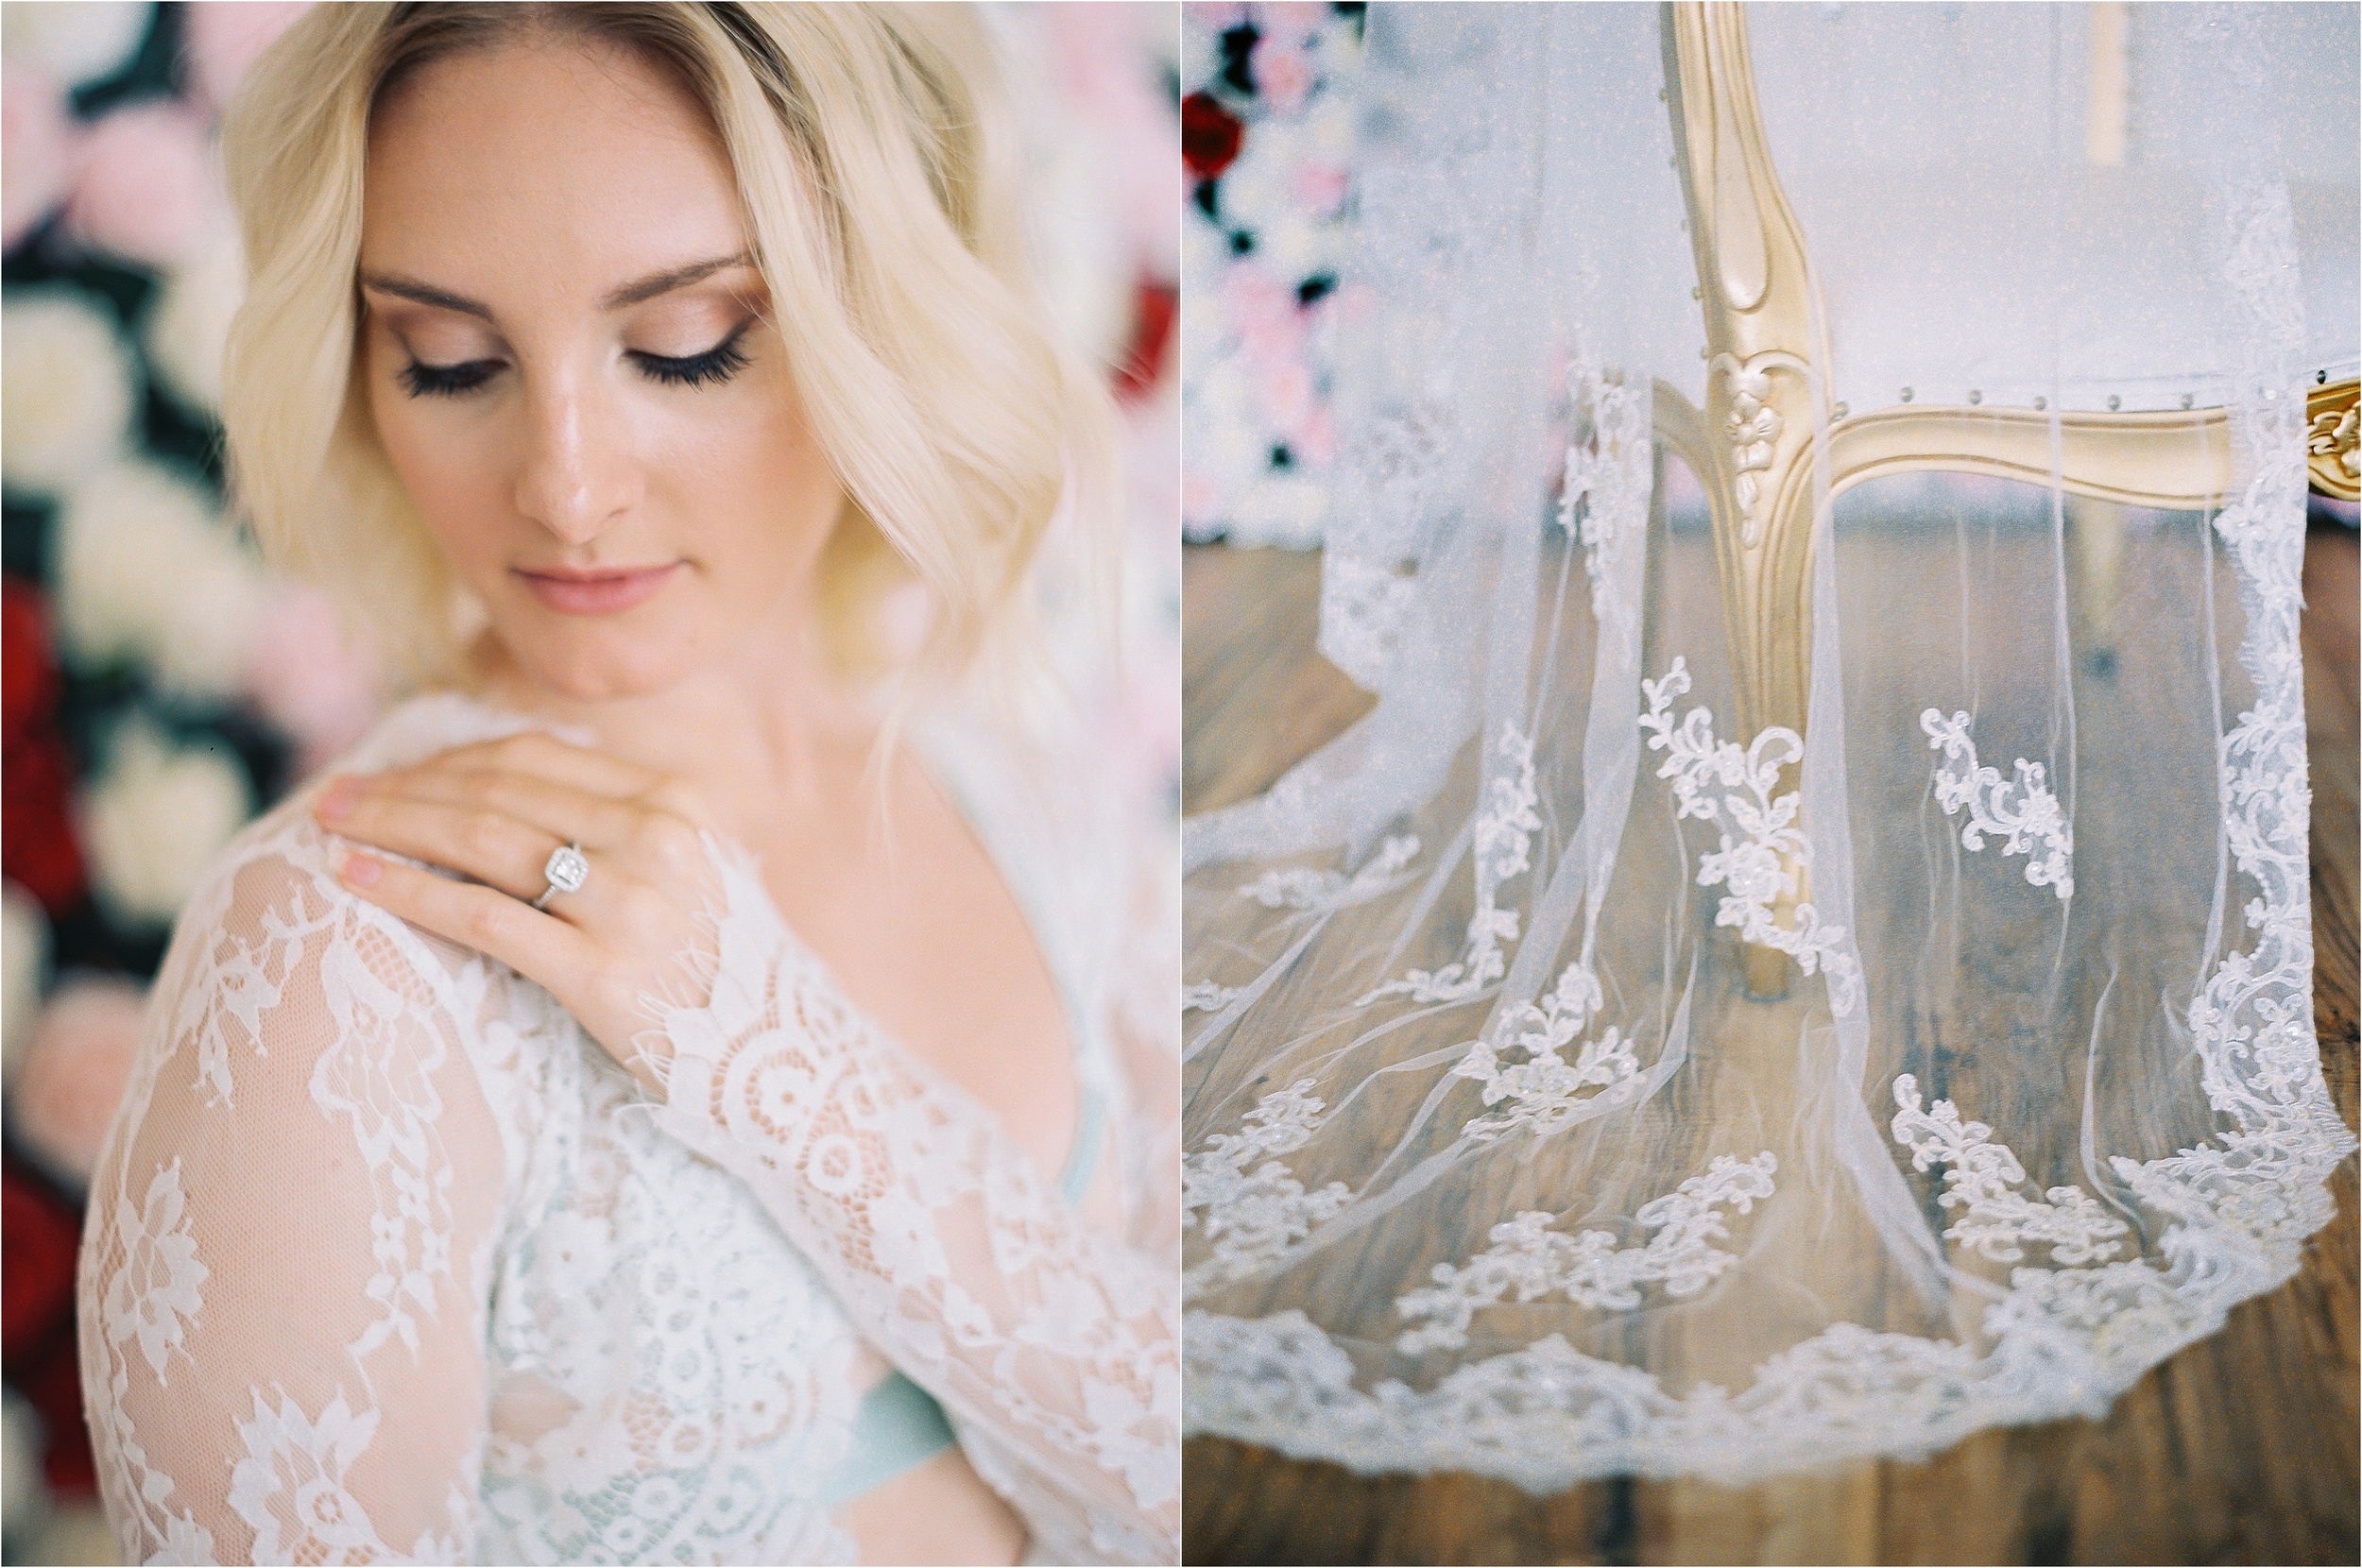 Los Angeles Bridal Boudoir Ring Detail Photo